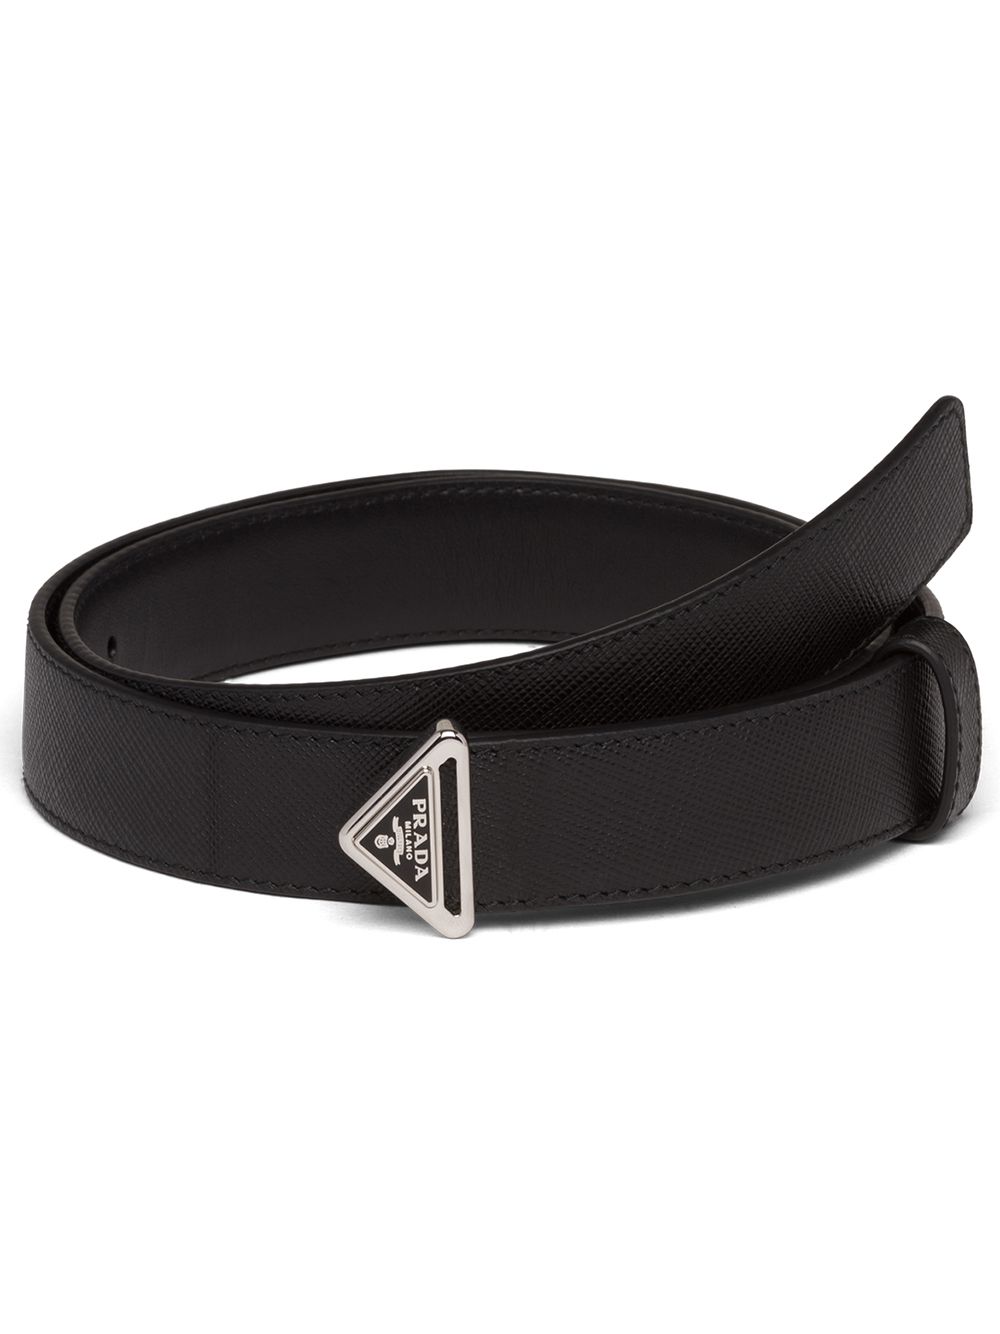 Prada triangle logo belt - Black von Prada